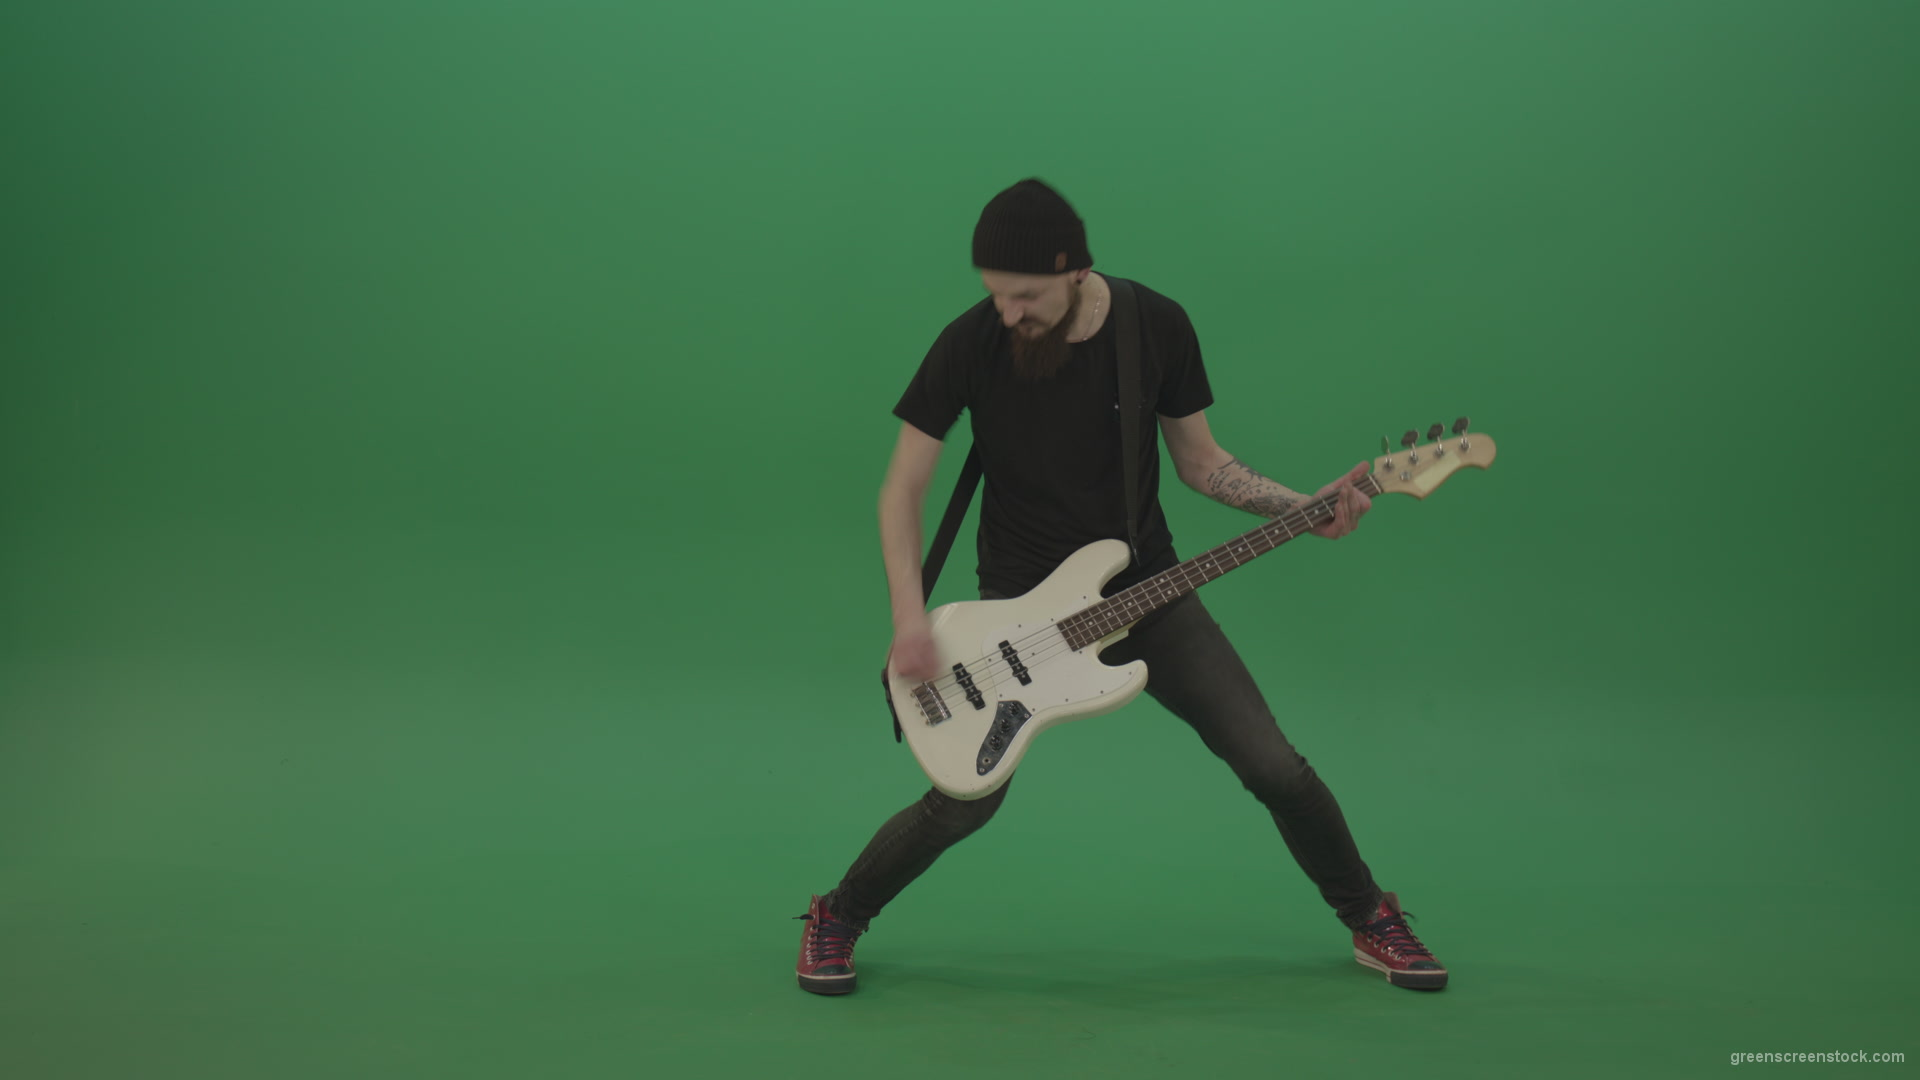 Young-man-with-beard-in-black-shirt-play-white-bass-guitar-on-green-screen_002 Green Screen Stock